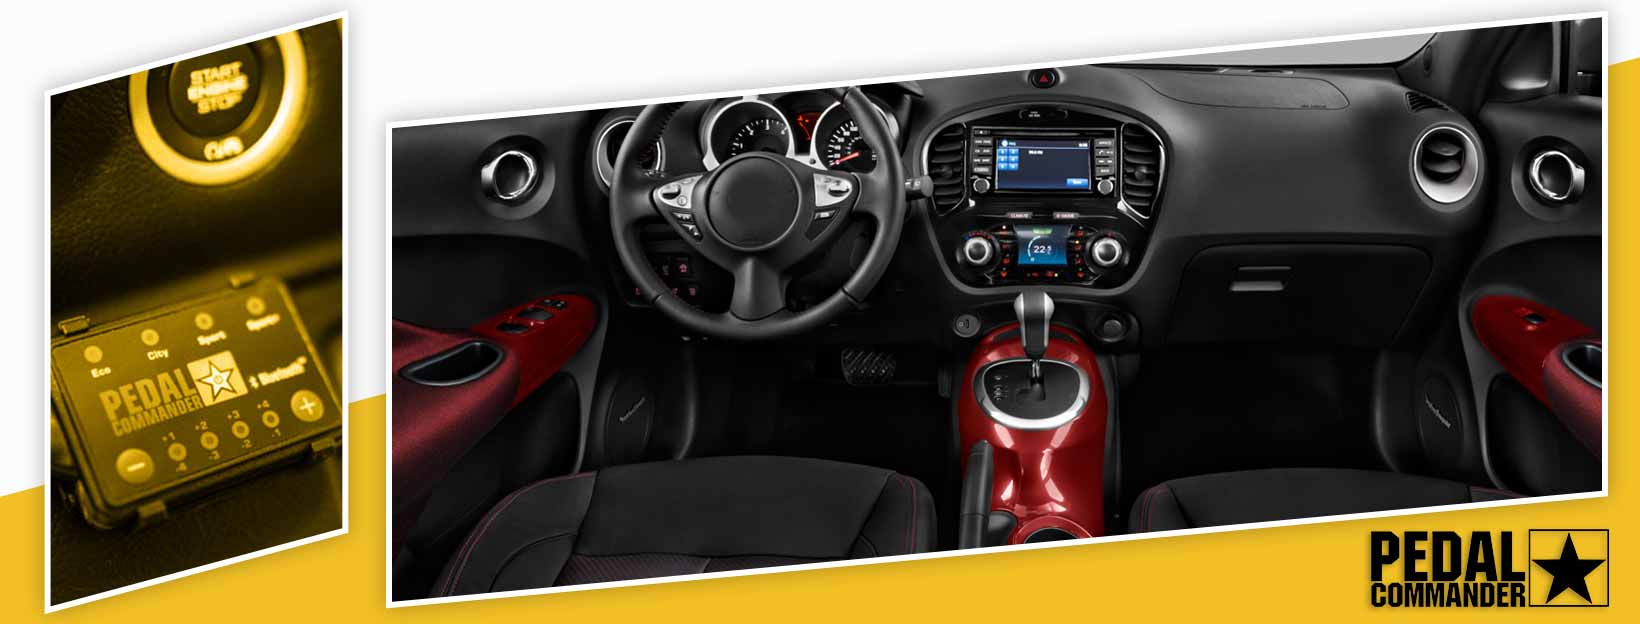 Pedal Commander for Nissan Juke - interior